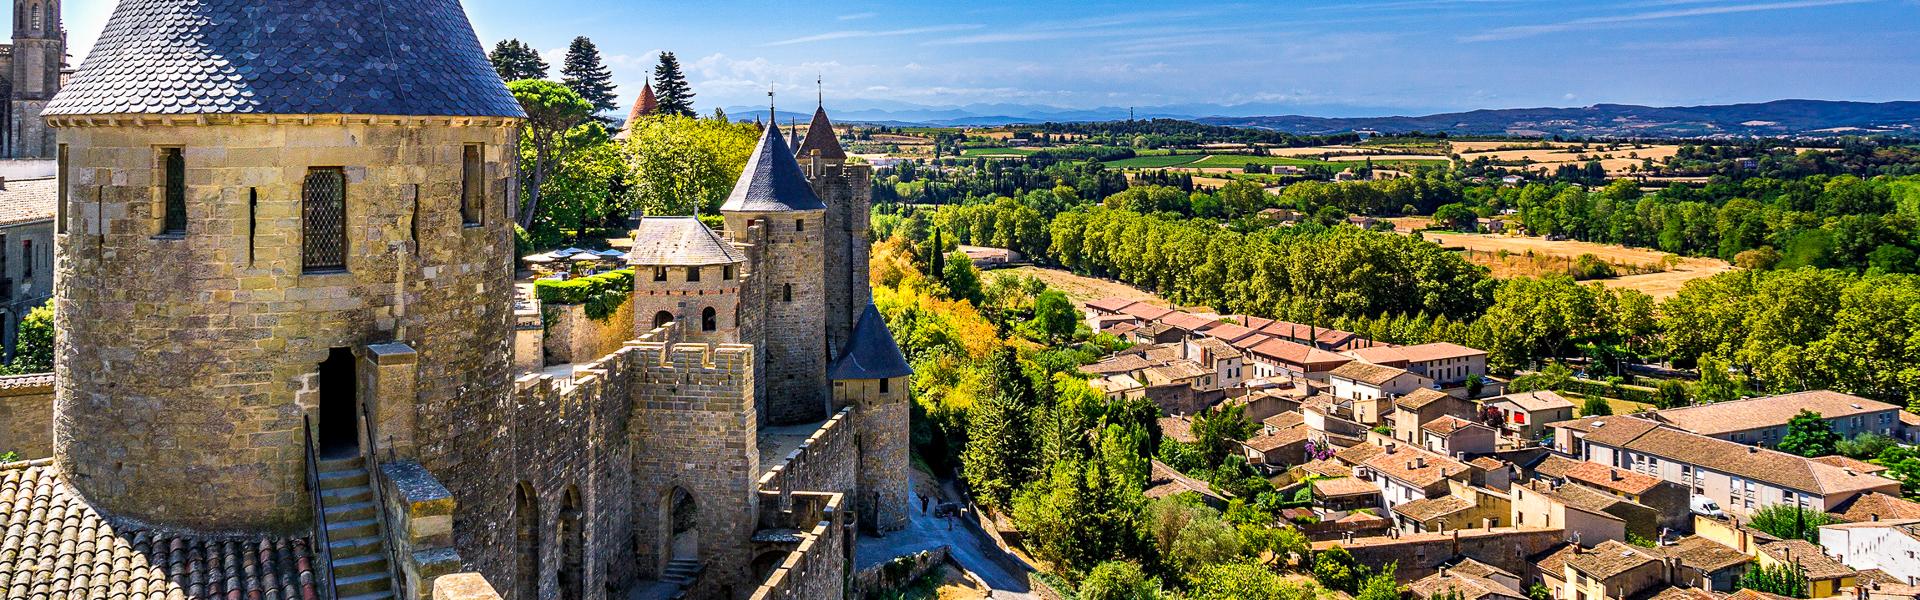 Festung von Carcassonne |  Simon Lehmann, Pixabay / Chamleon